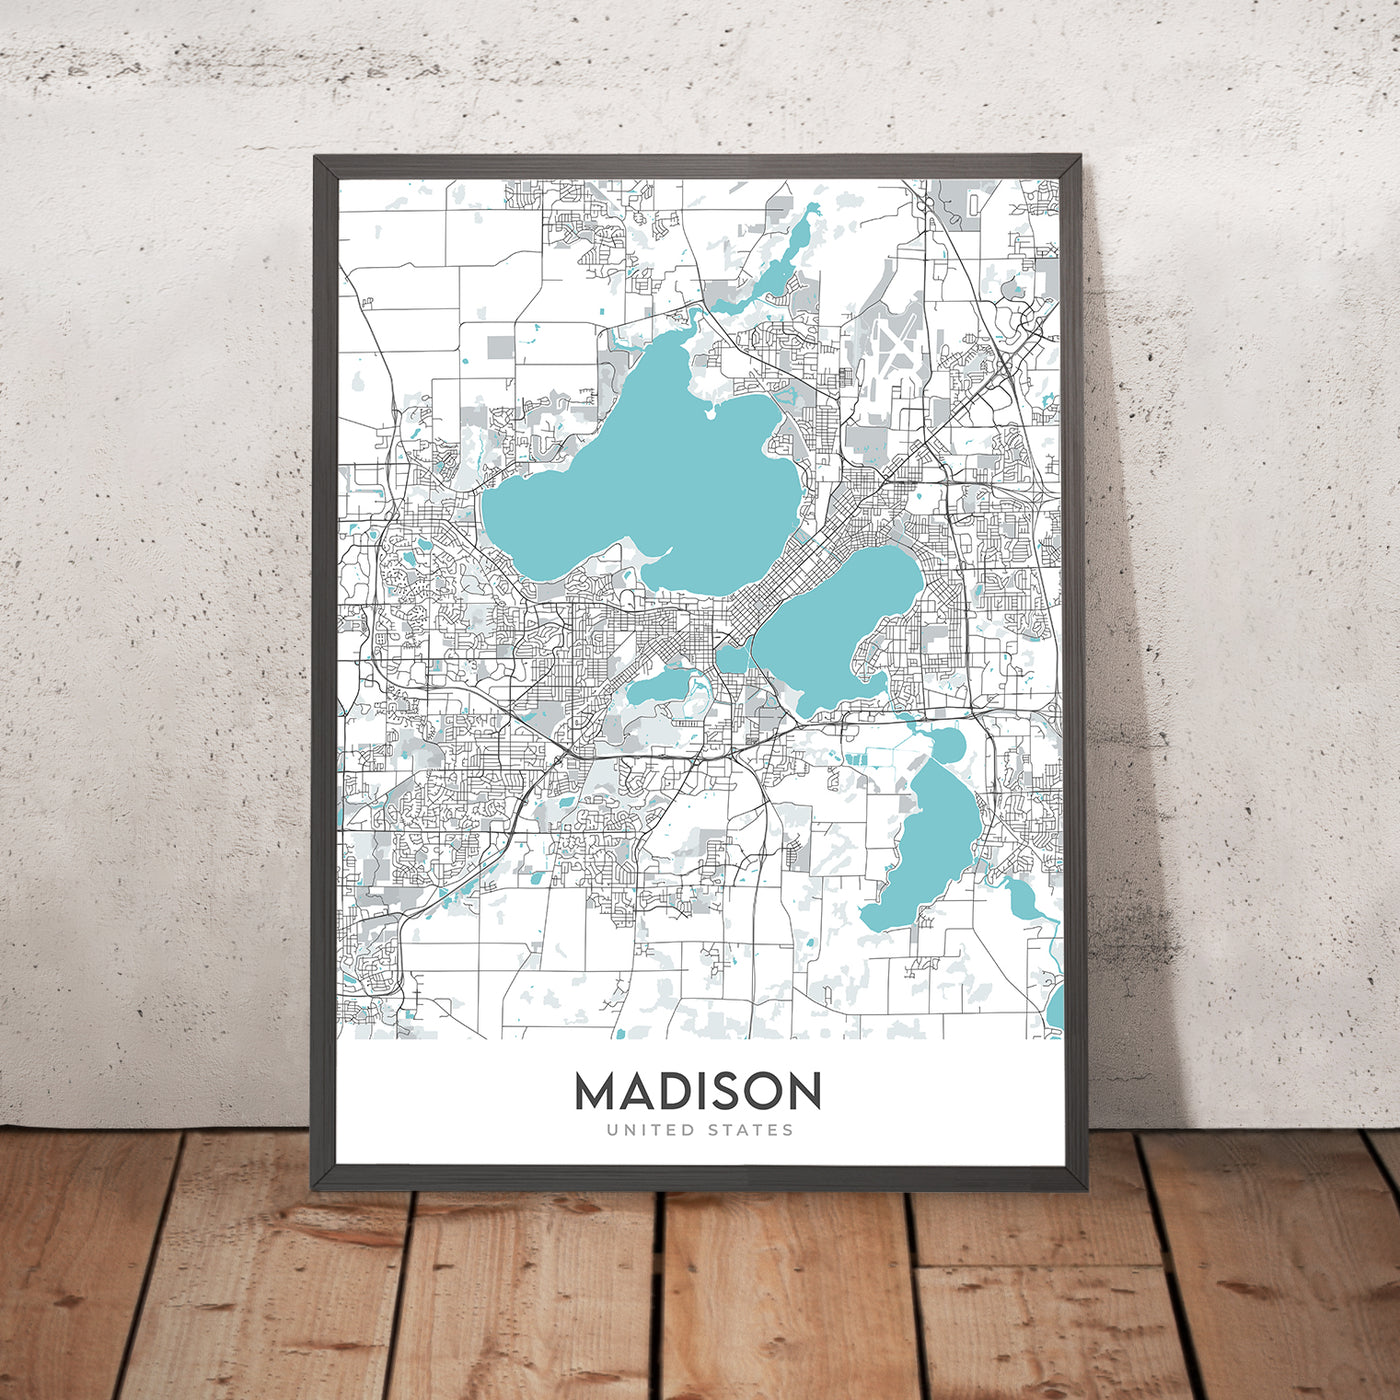 Modern City Map of Madison, WI: UW-Madison, Capitol, State St, Olbrich Park, Henry Vilas Zoo